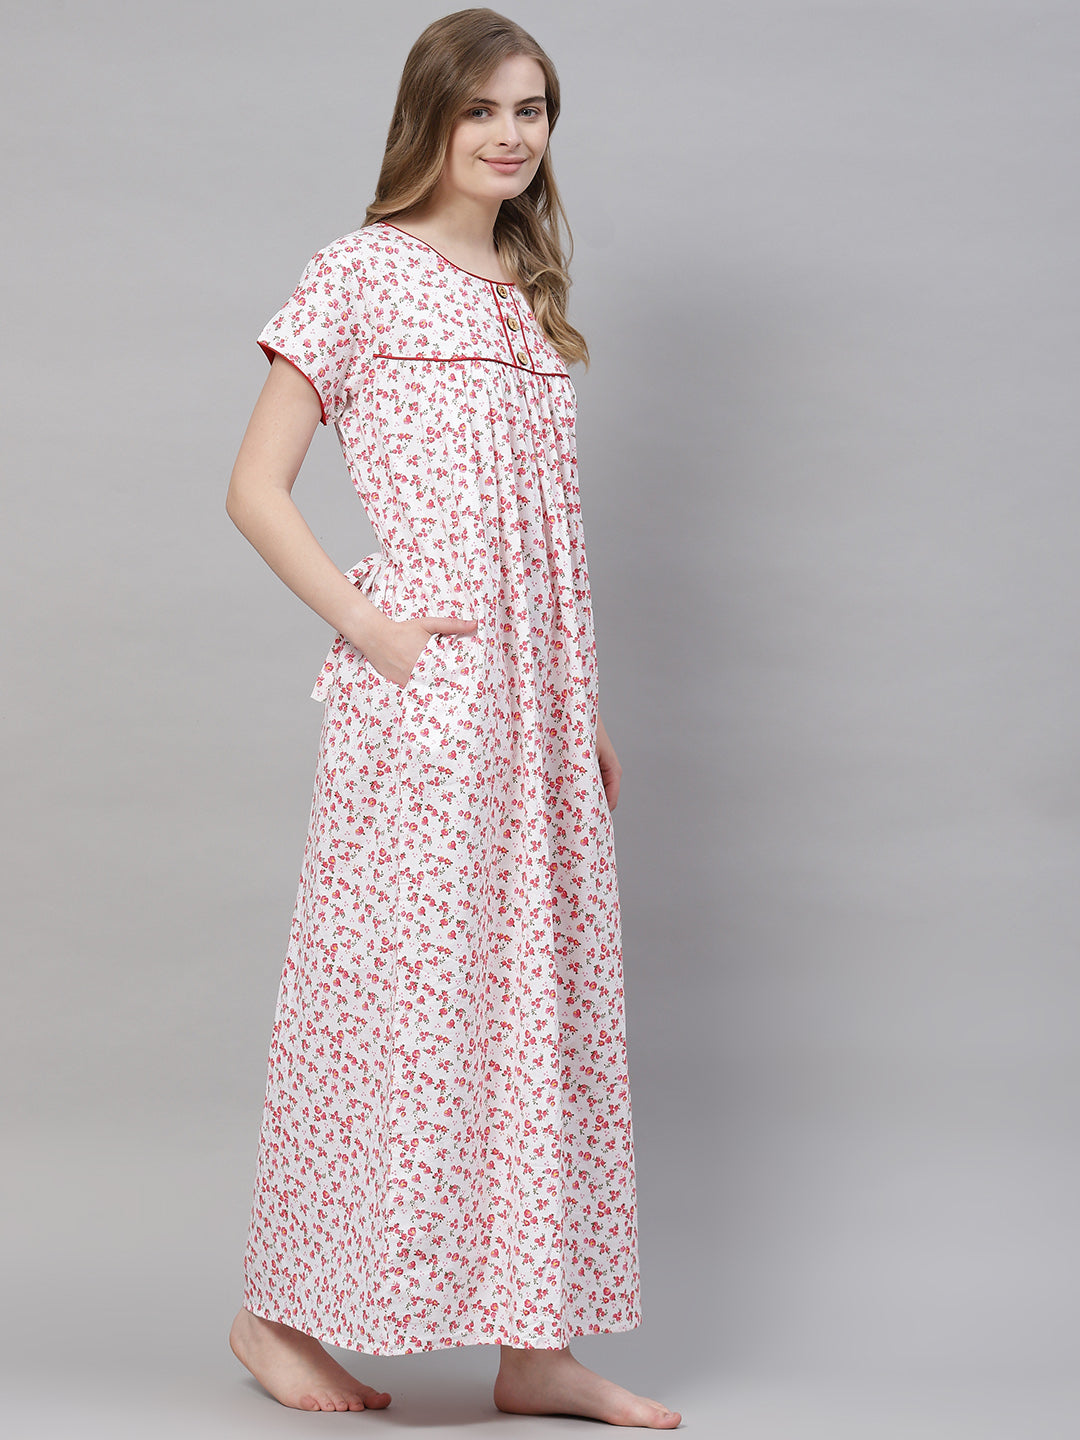 Women's Pure cotton Night Gown Sleepwear Yoke style Printed Maxi